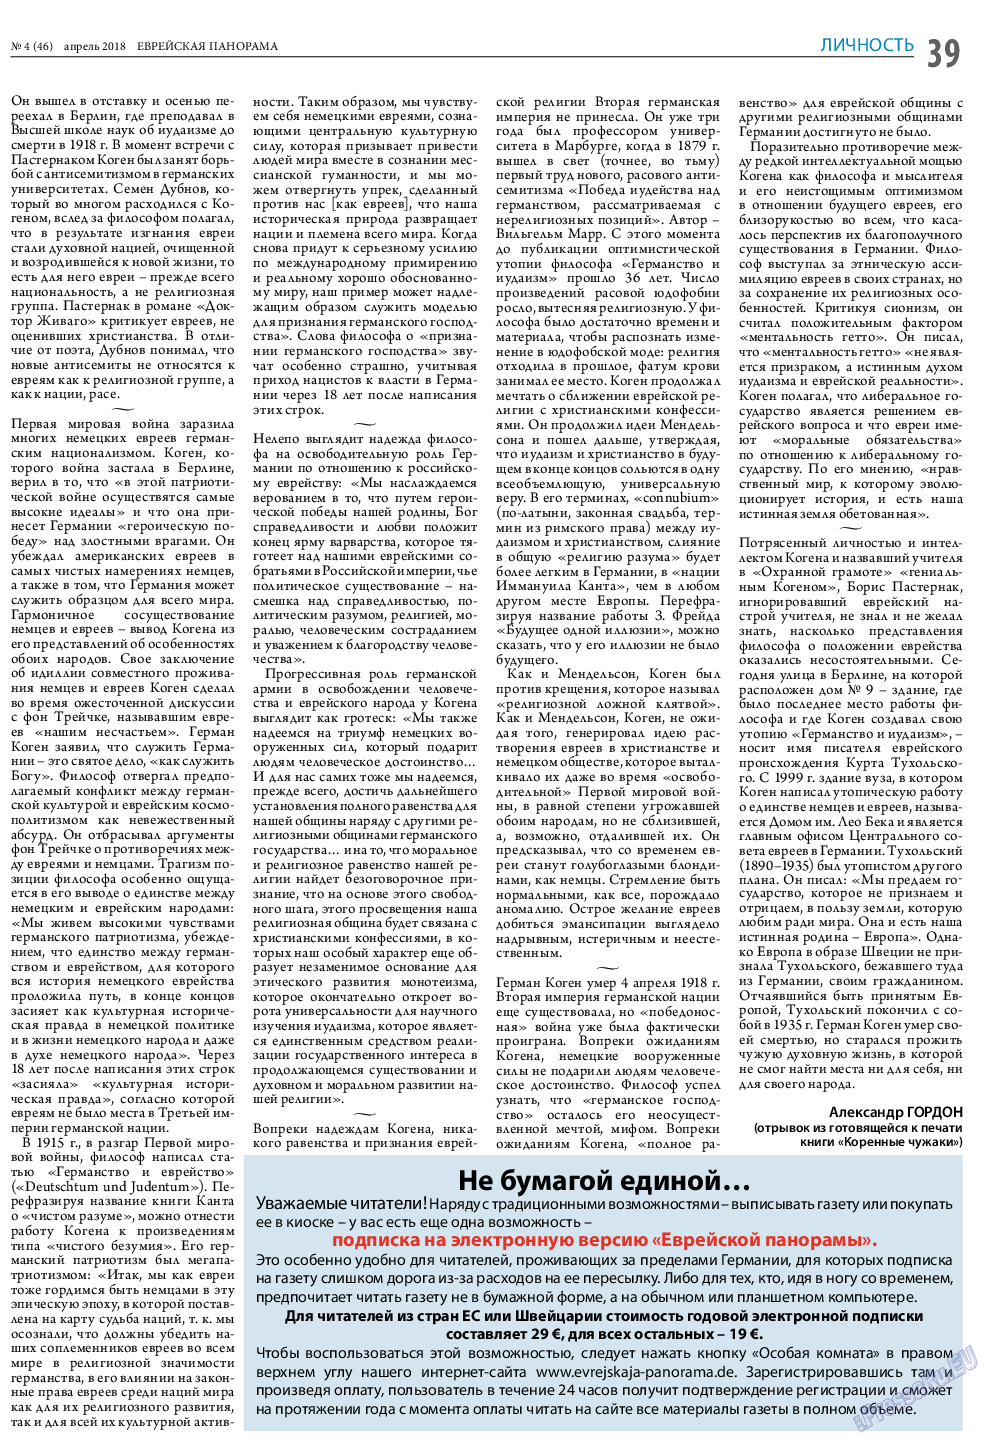 Еврейская панорама, газета. 2018 №4 стр.39